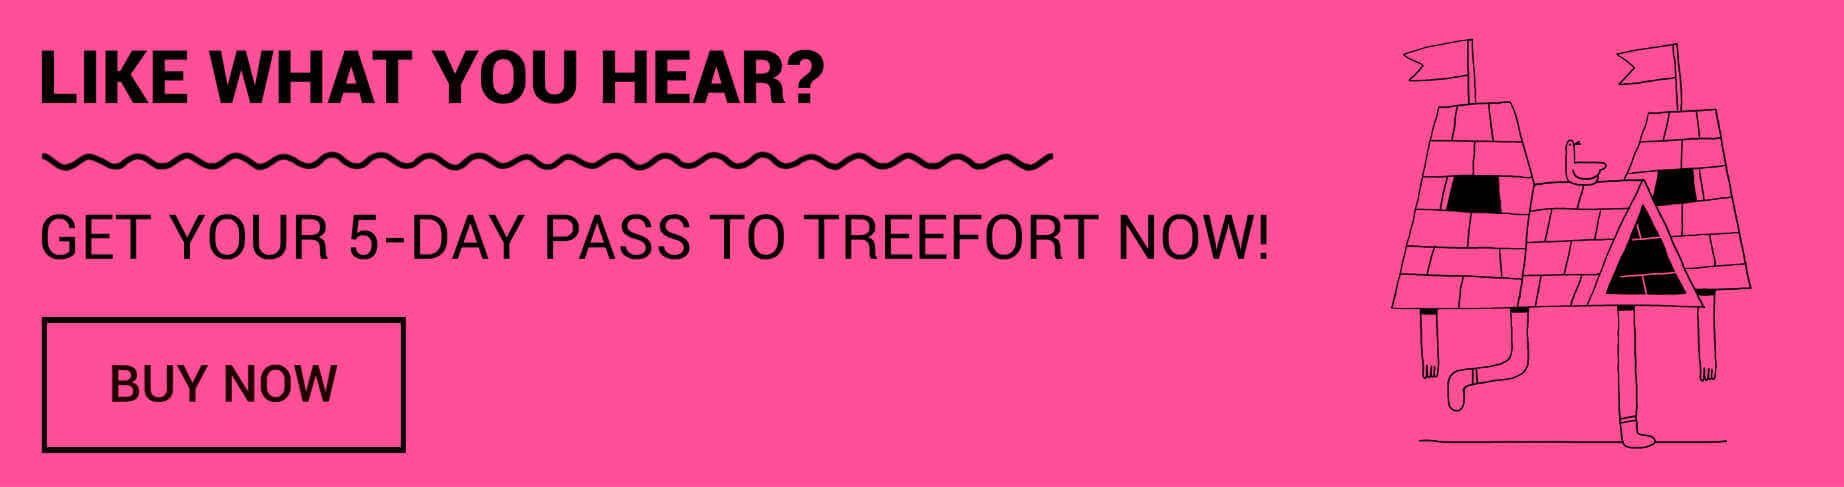 Buy Your Treefort Pass Now!